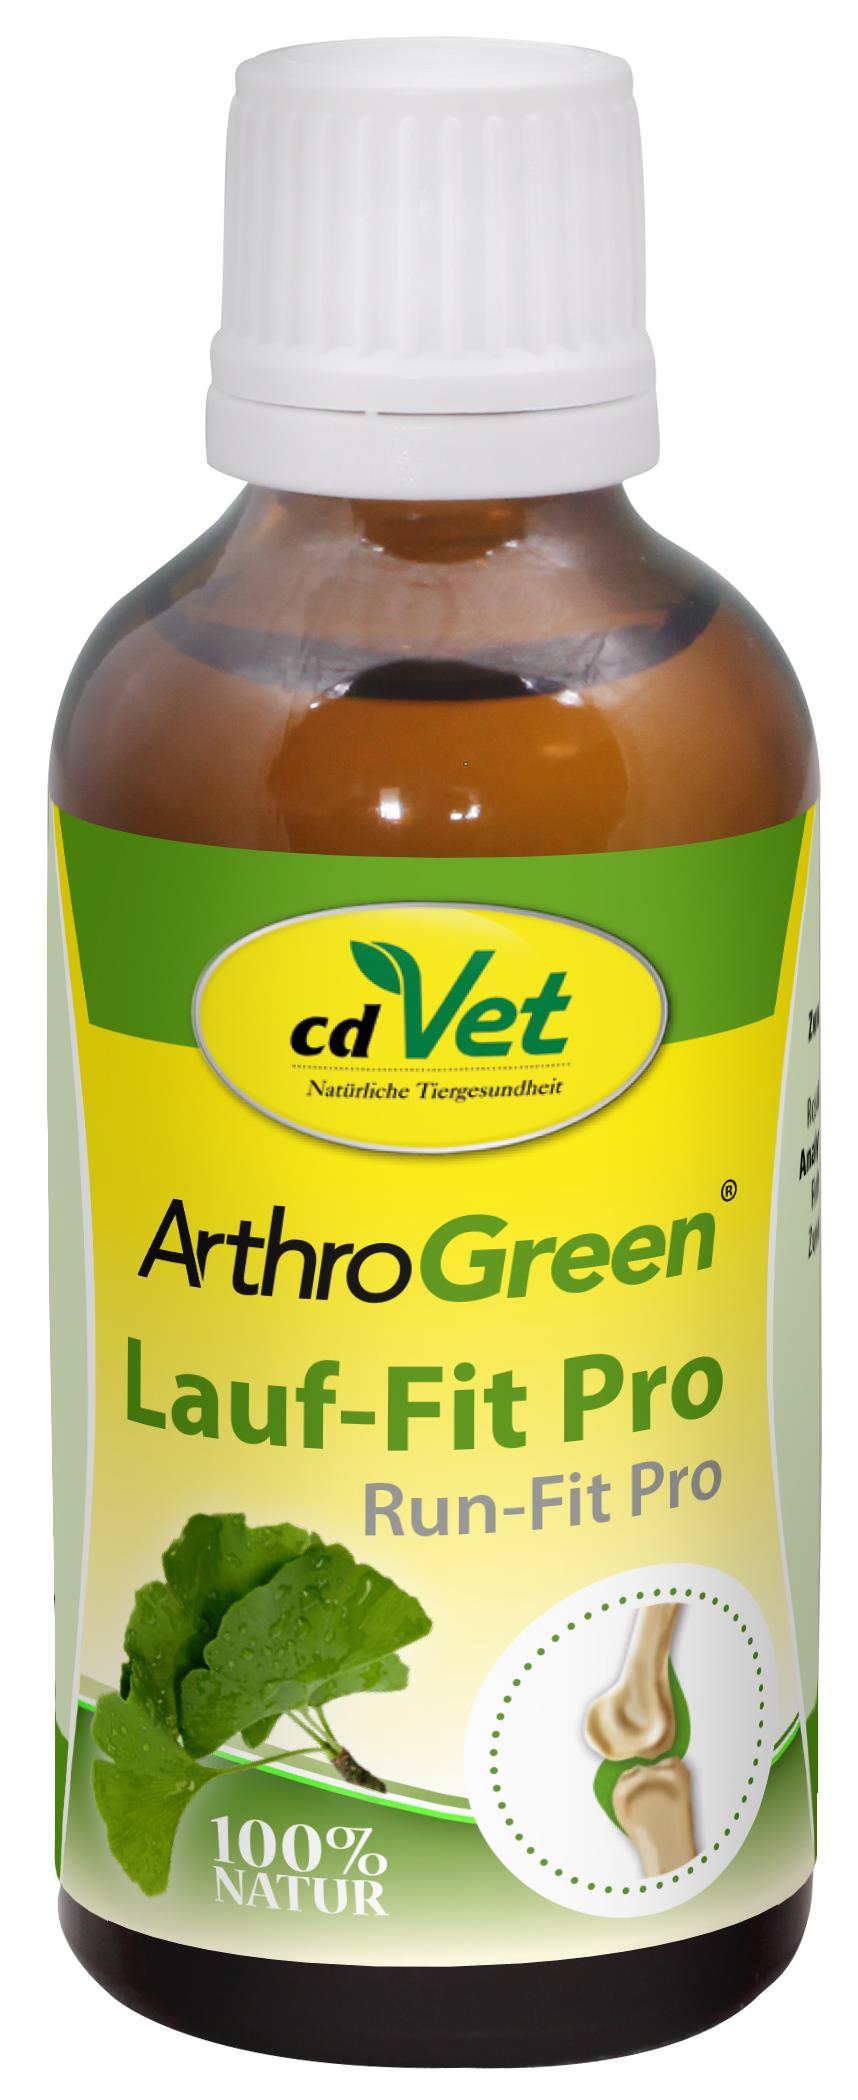 ArthroGreen Lauf-Fit Pro 50 ml